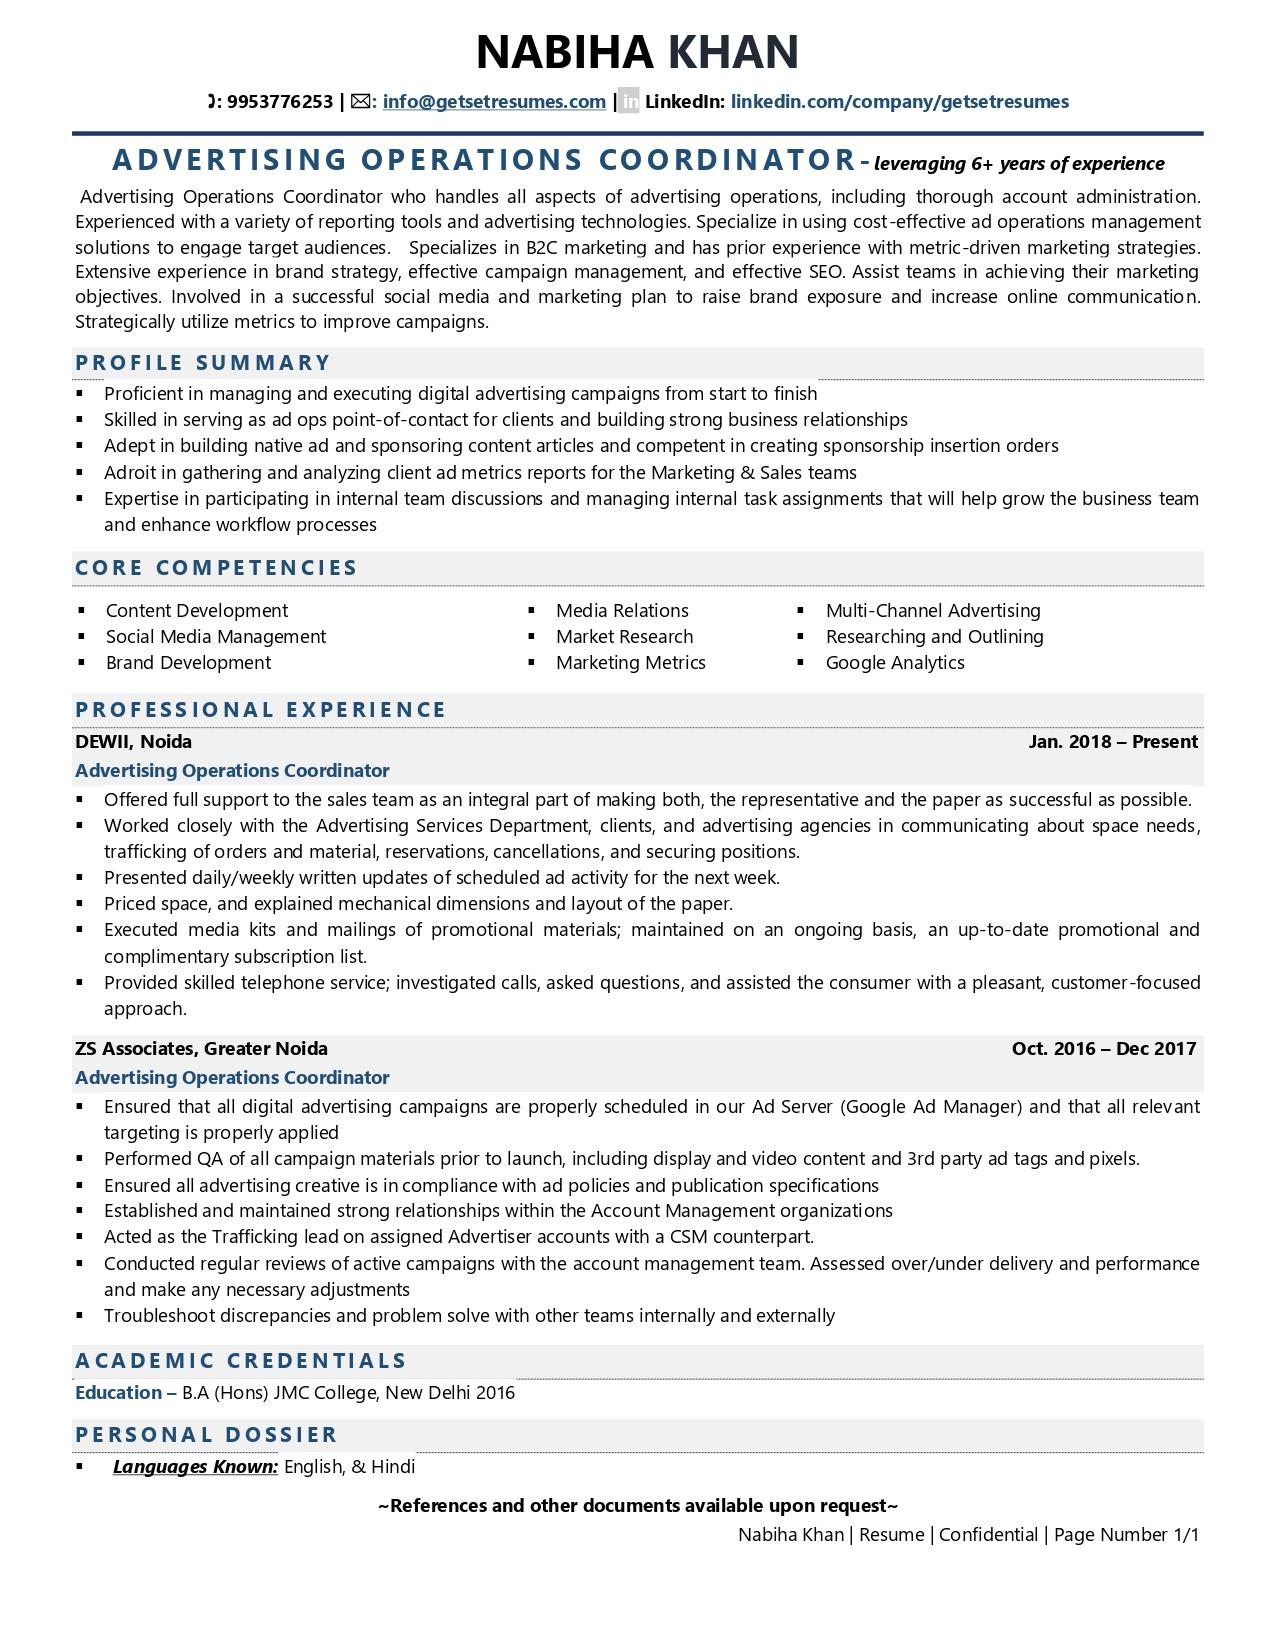 Advertising Operations Coordinator - Resume Example & Template